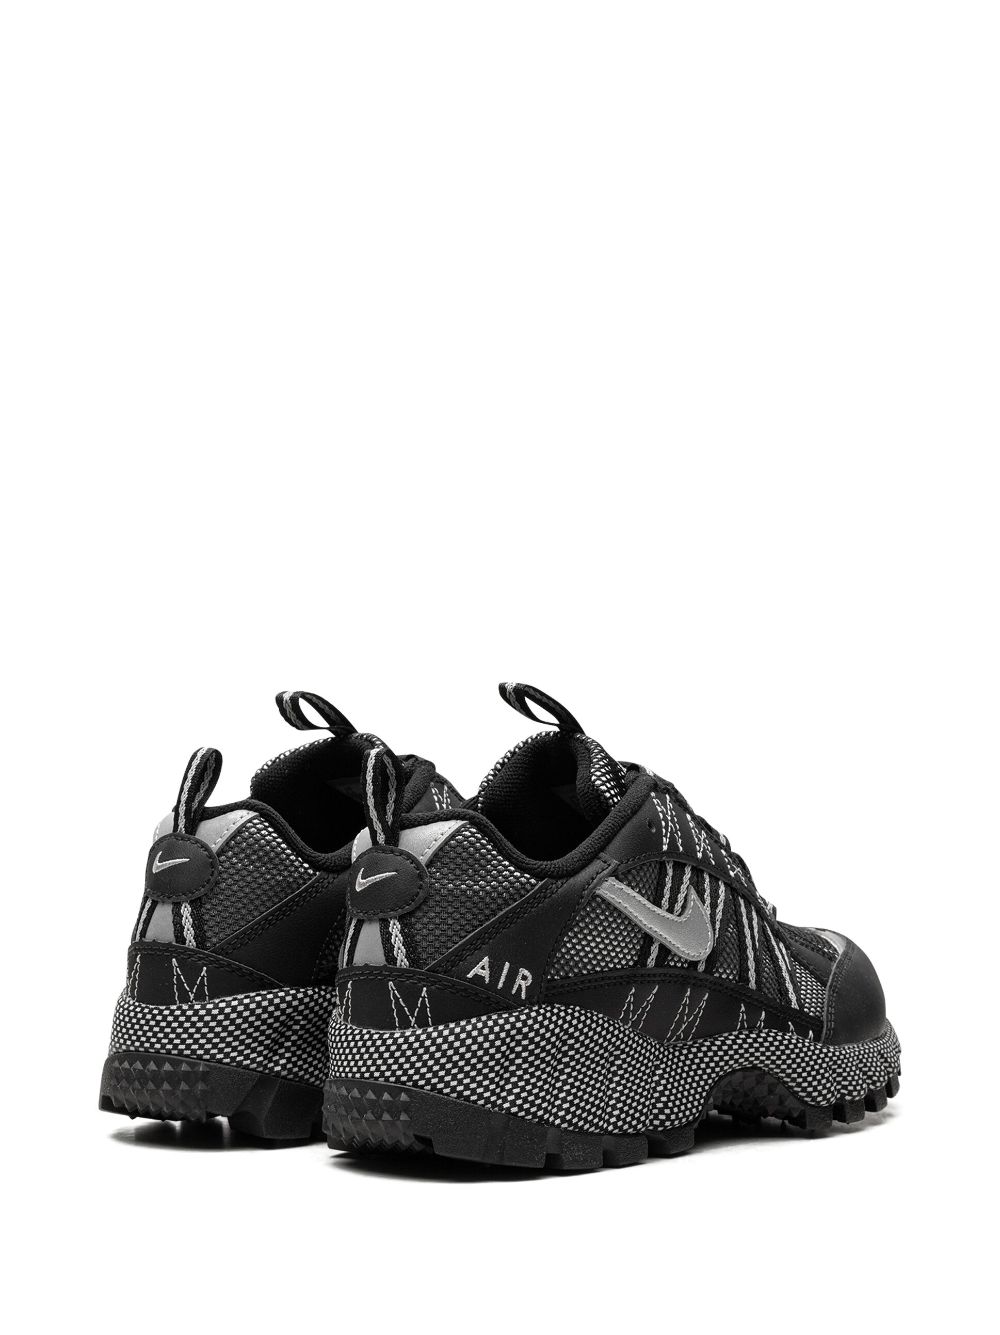 AIR HUMARA BLACK/METALLIC SILVER 运动鞋